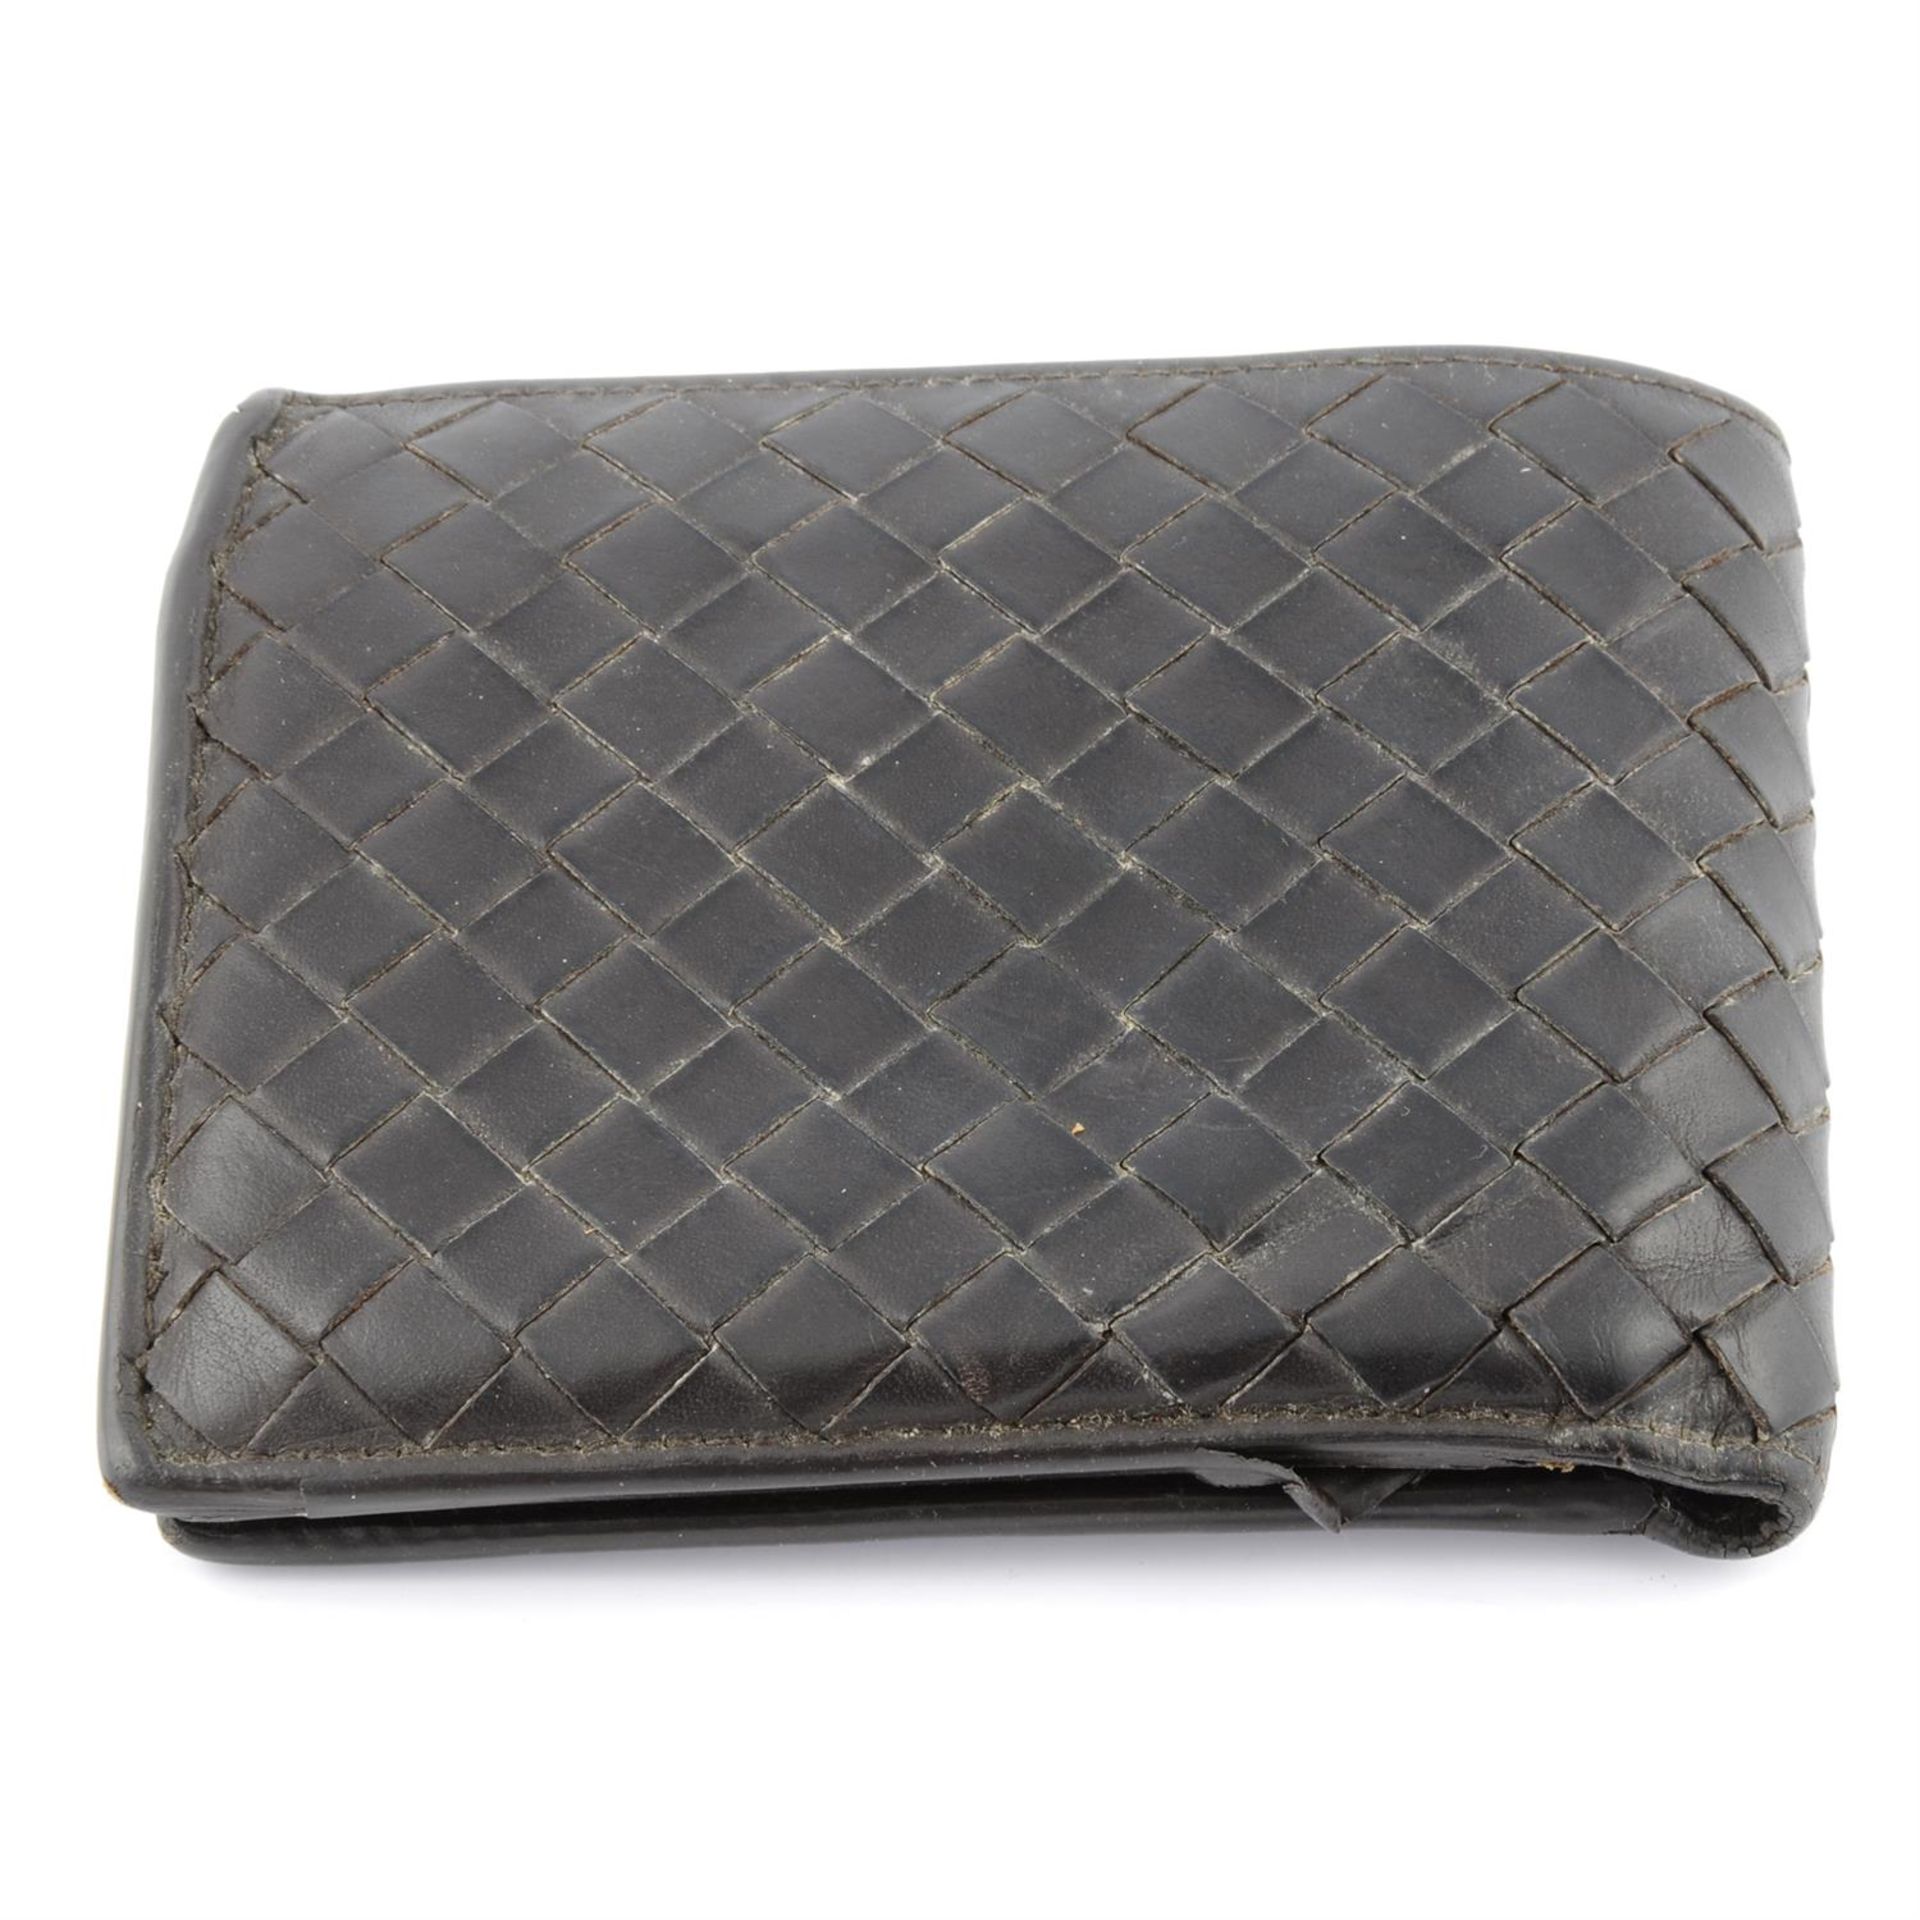 BOTTEGA VENETA - a Intrecciato leather Bifold wallet. - Bild 2 aus 4